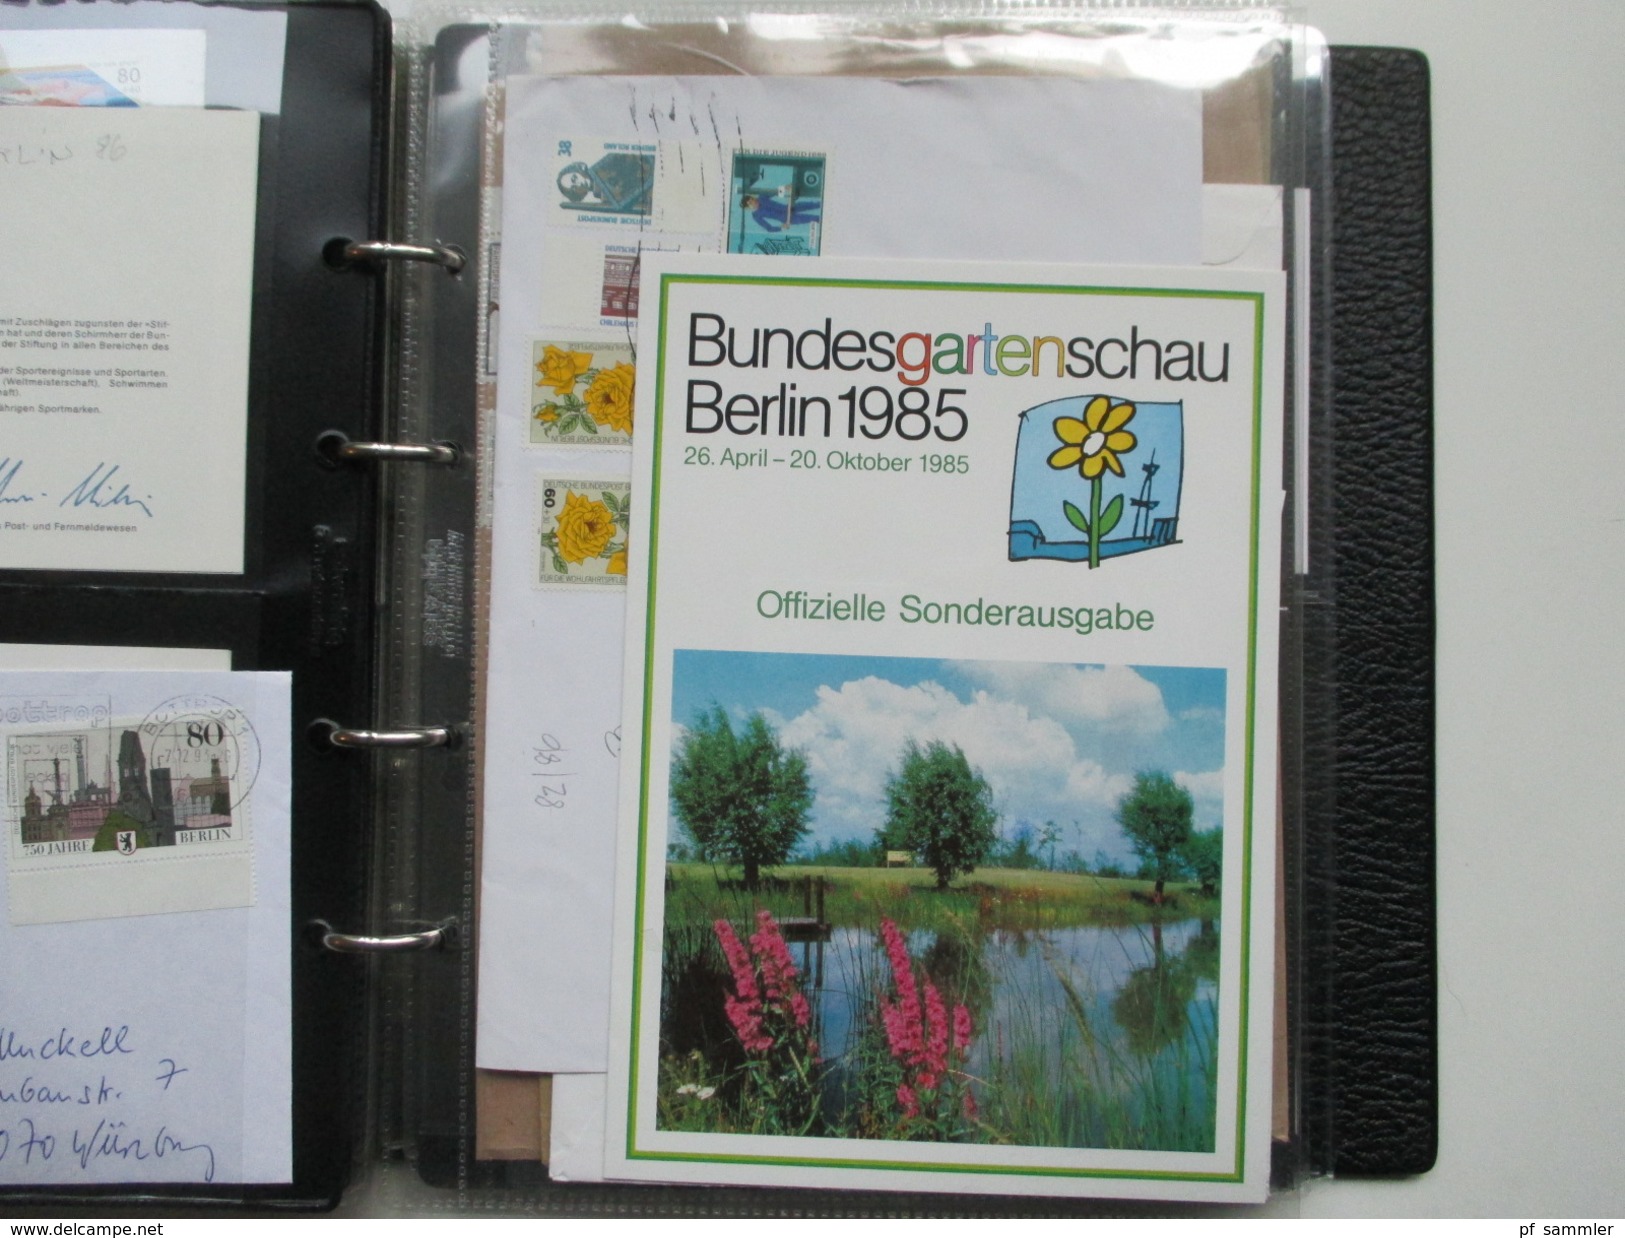 Berlin Belegesammlung ca. 100 Briefe.Bedarf / FDC 1976-1991. Interessante Stücke / Stöberposten! Bund / Berlin Stempel.